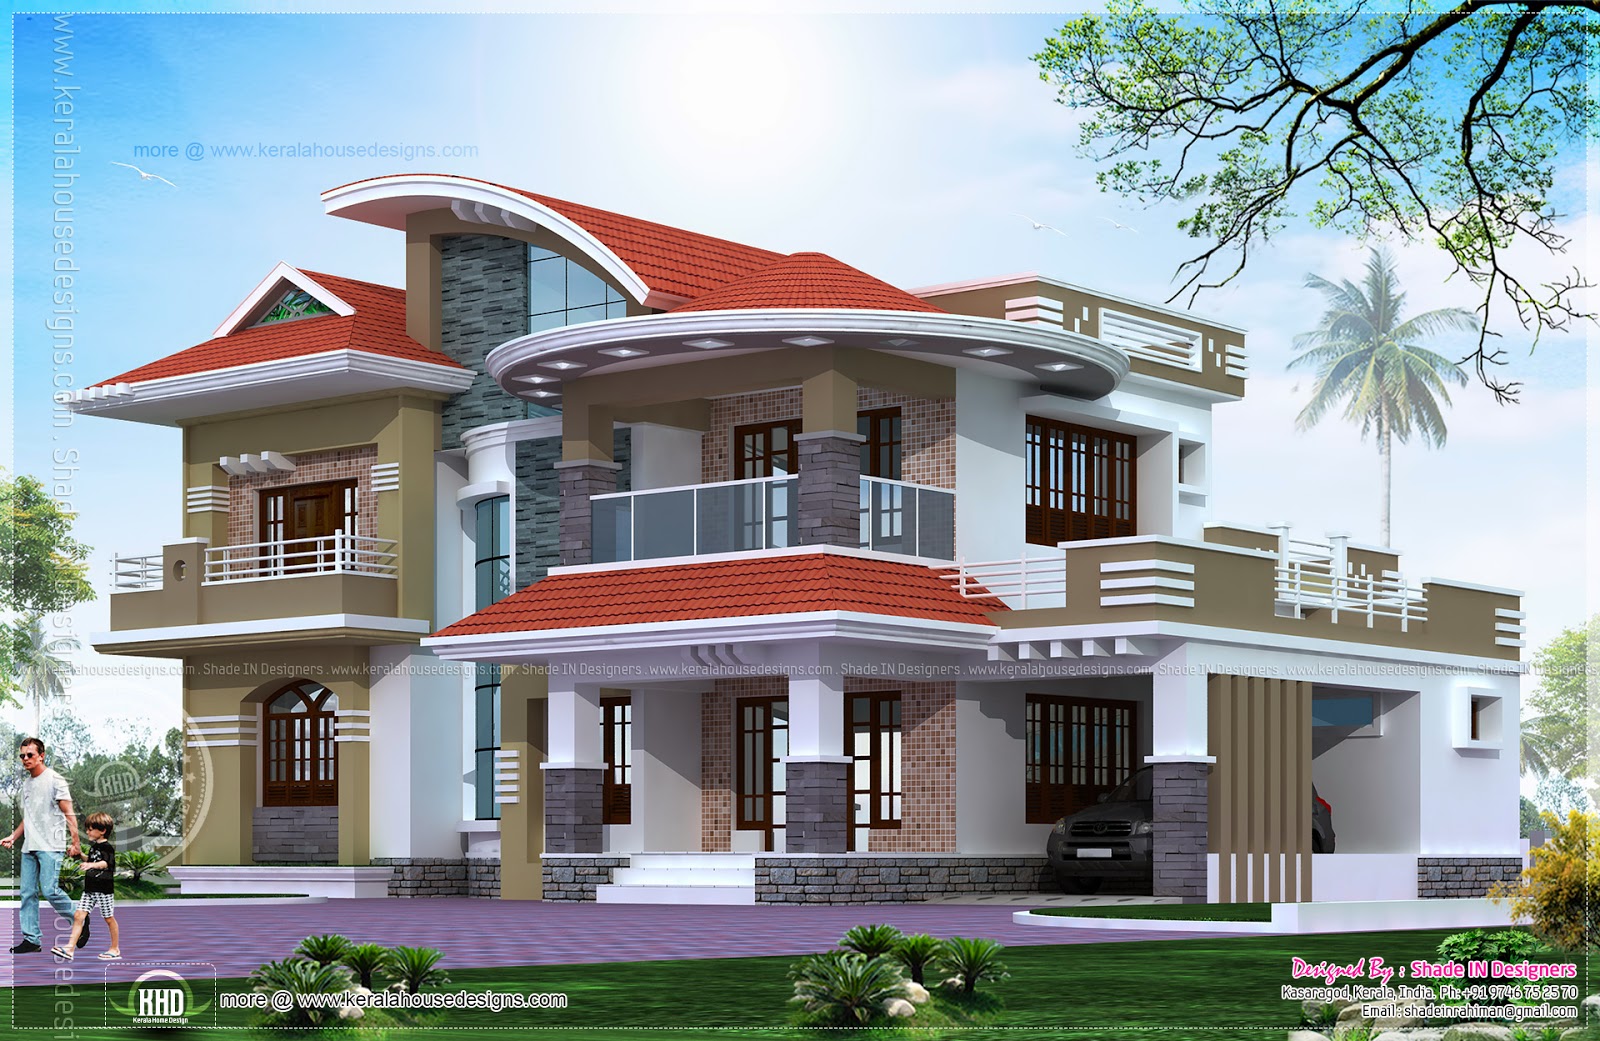  5  bedroom  Luxury house  in Kasaragod Home  Kerala  Plans 